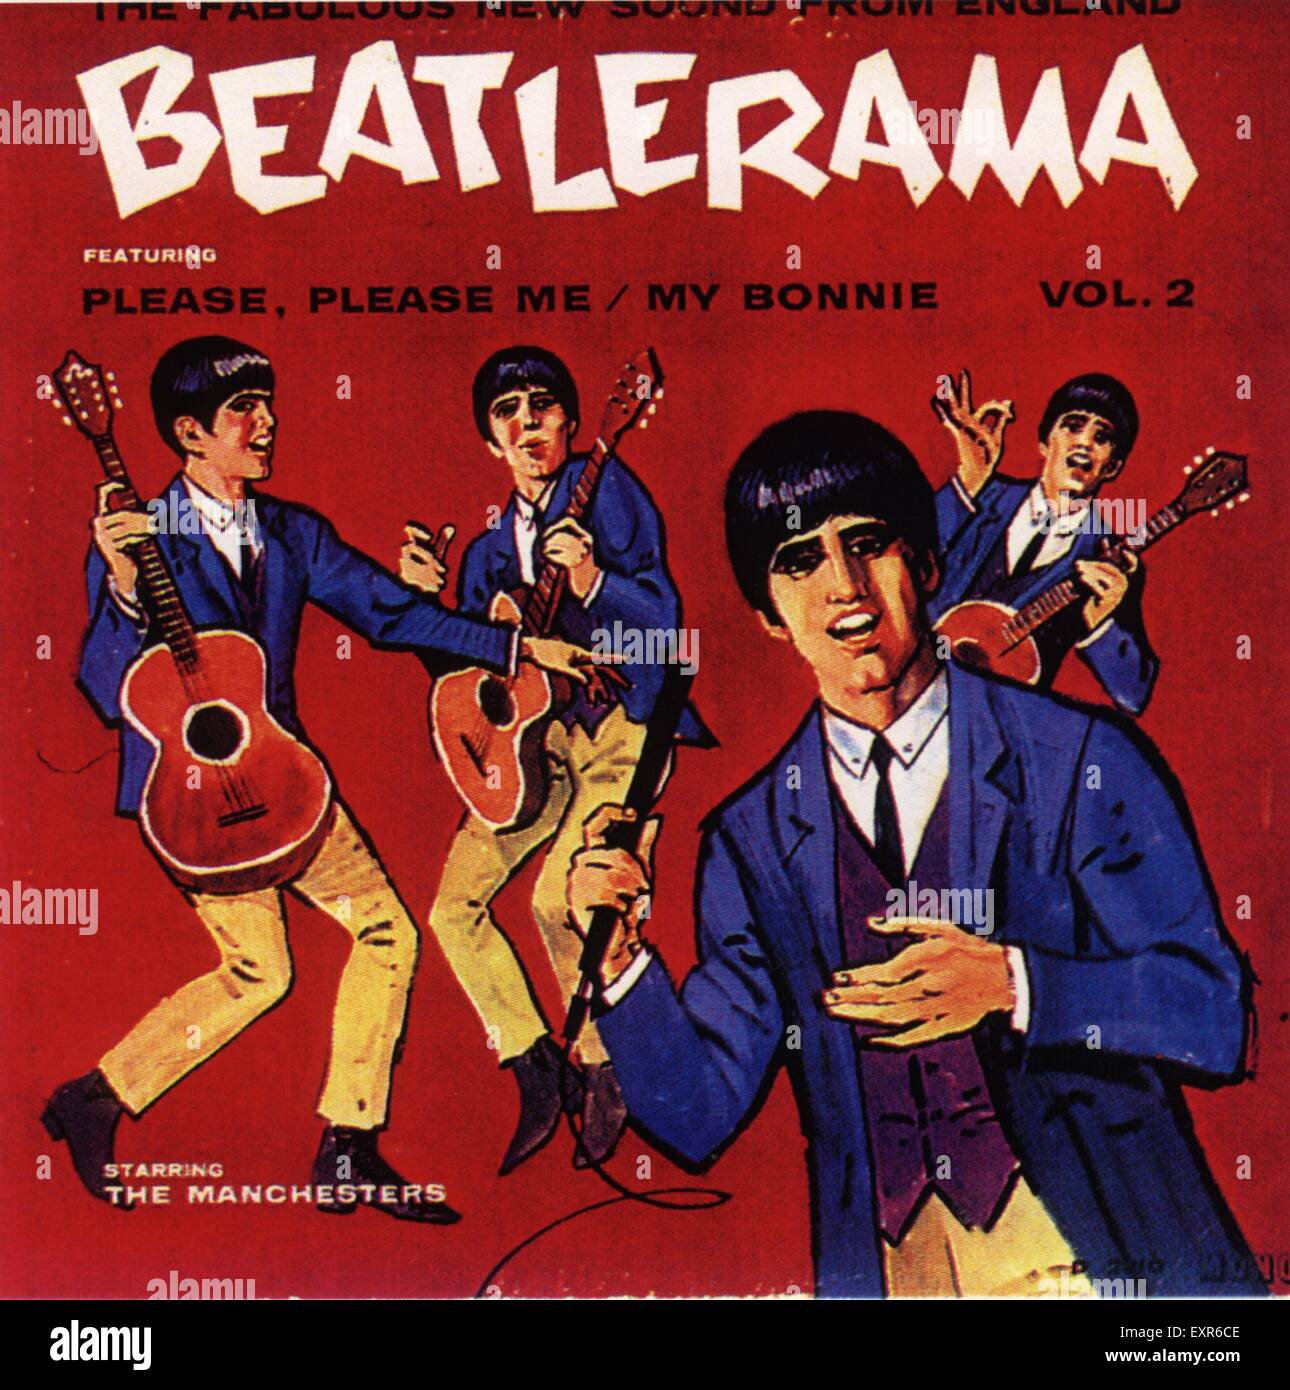 1960s USA Beatlerama Album Cover Stock Photo